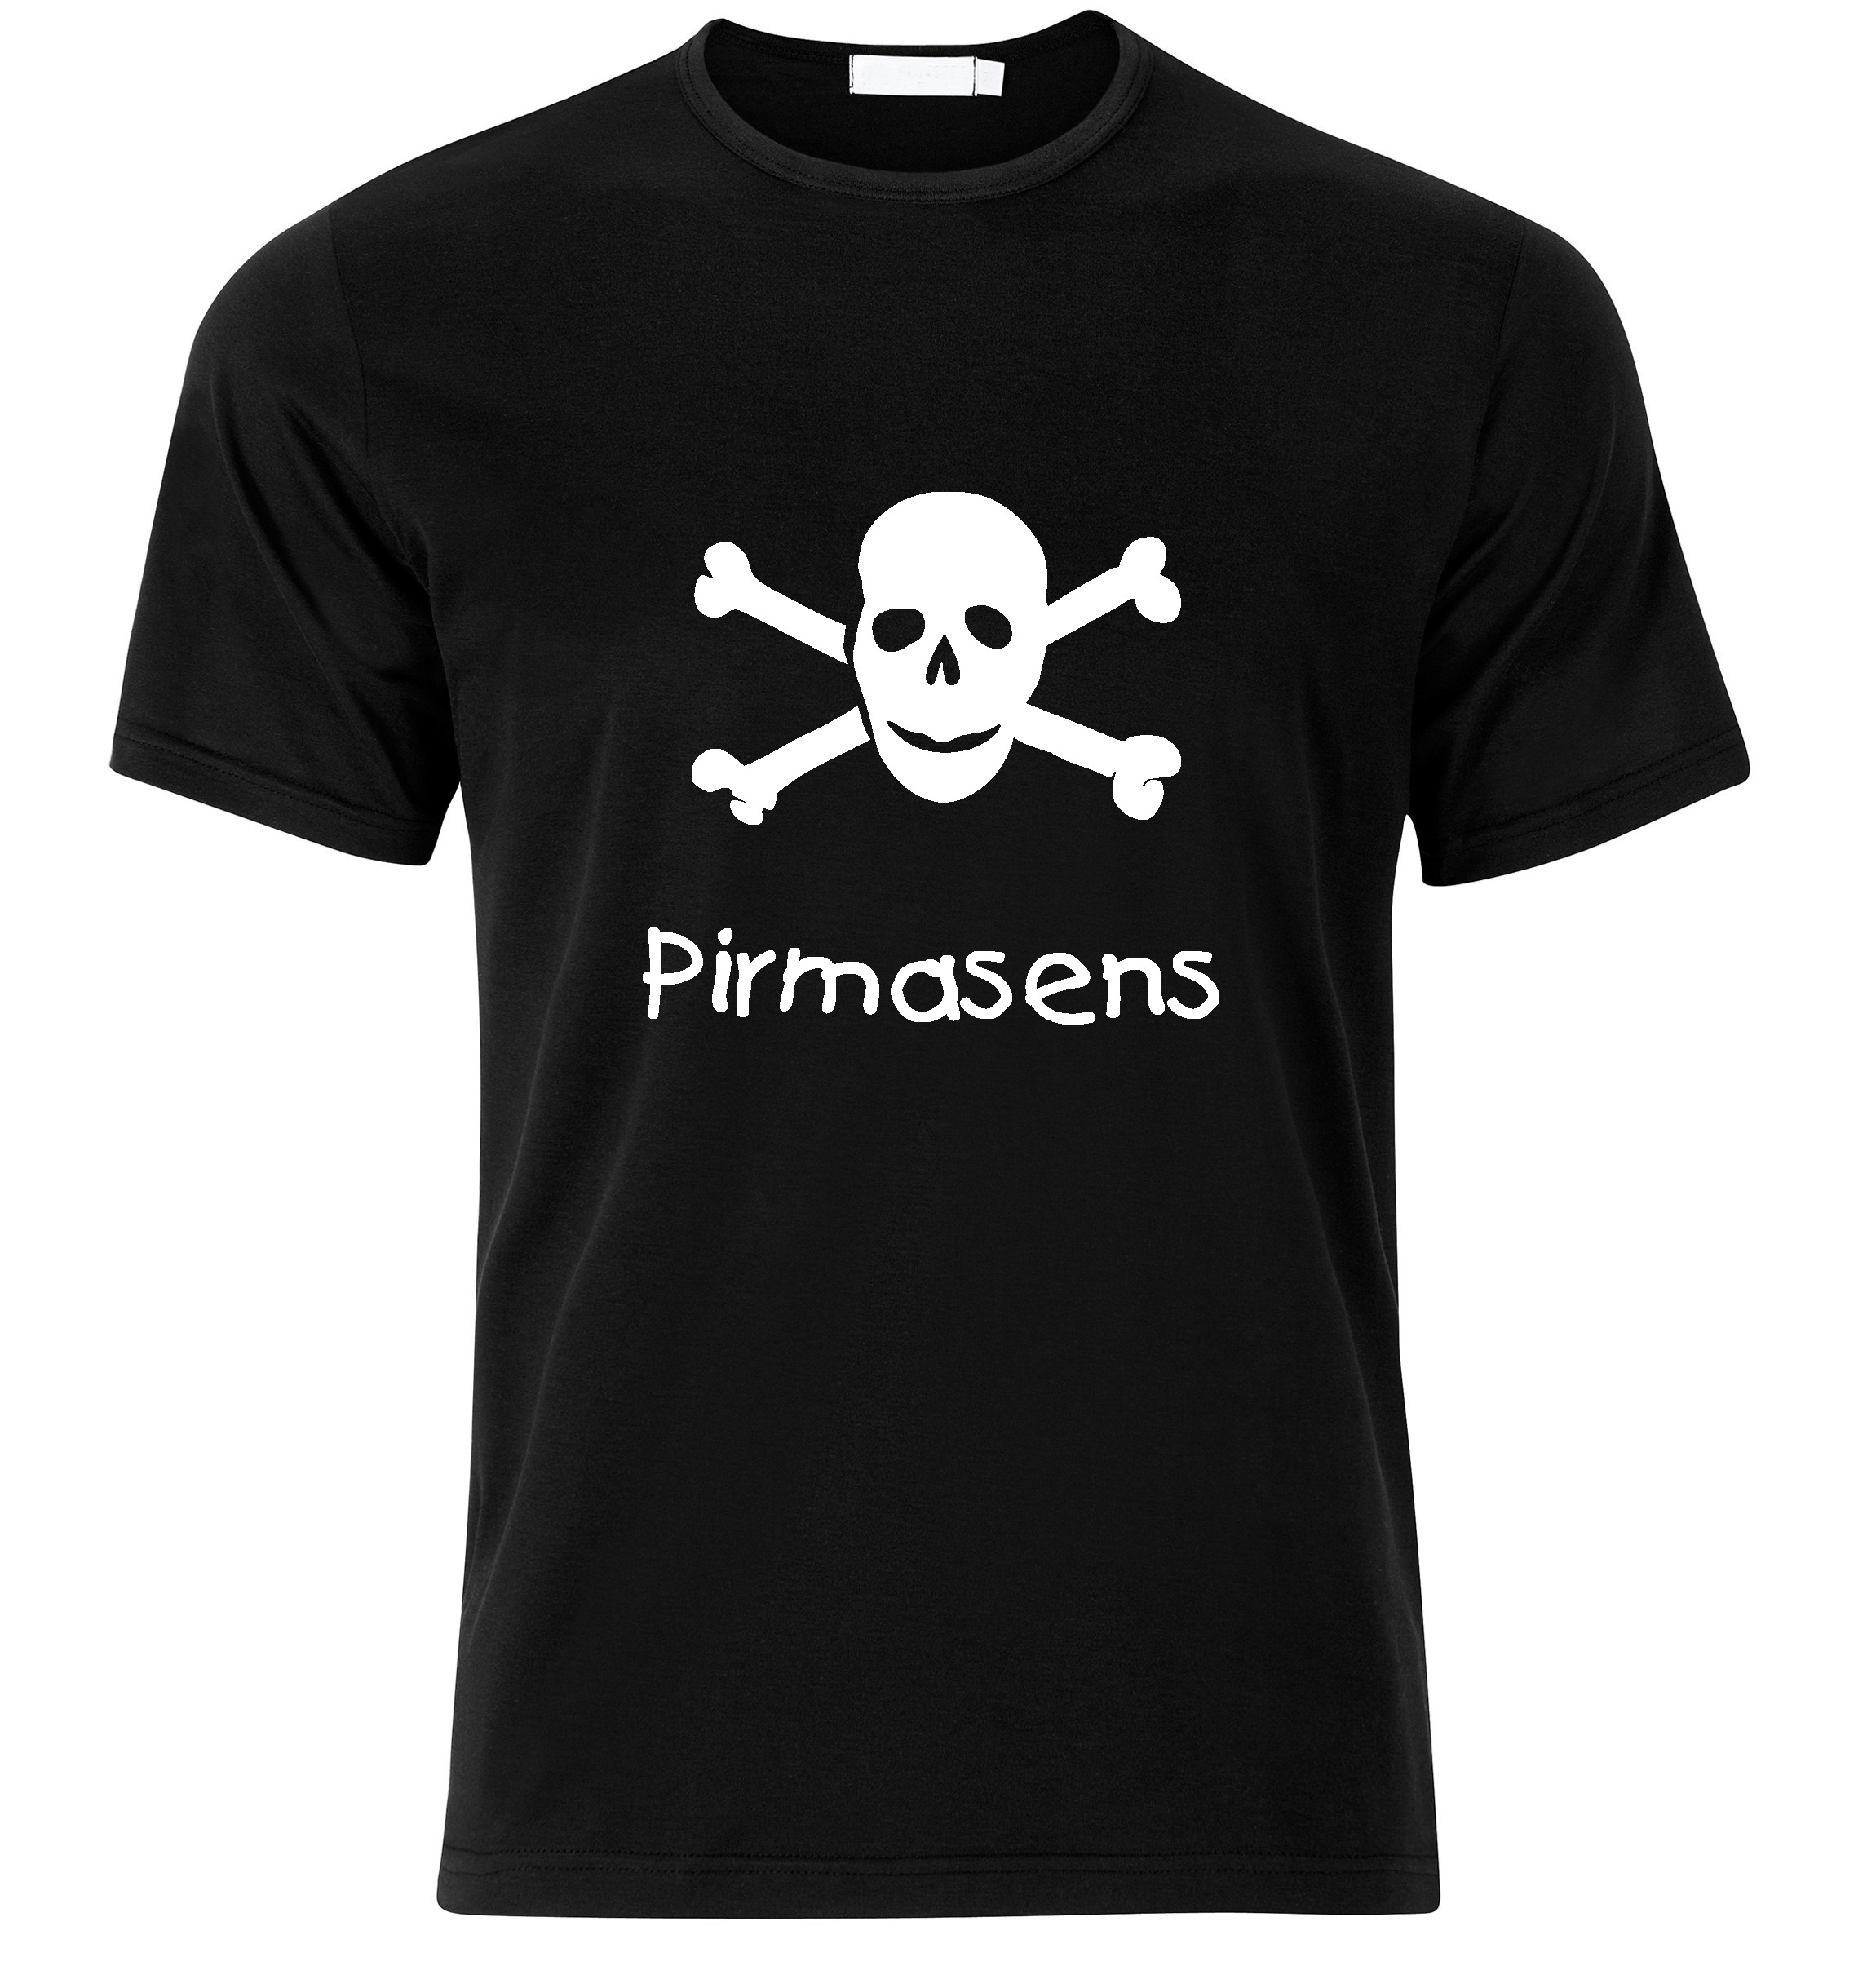 T-Shirt Pirmasens Jolly Roger, Totenkopf